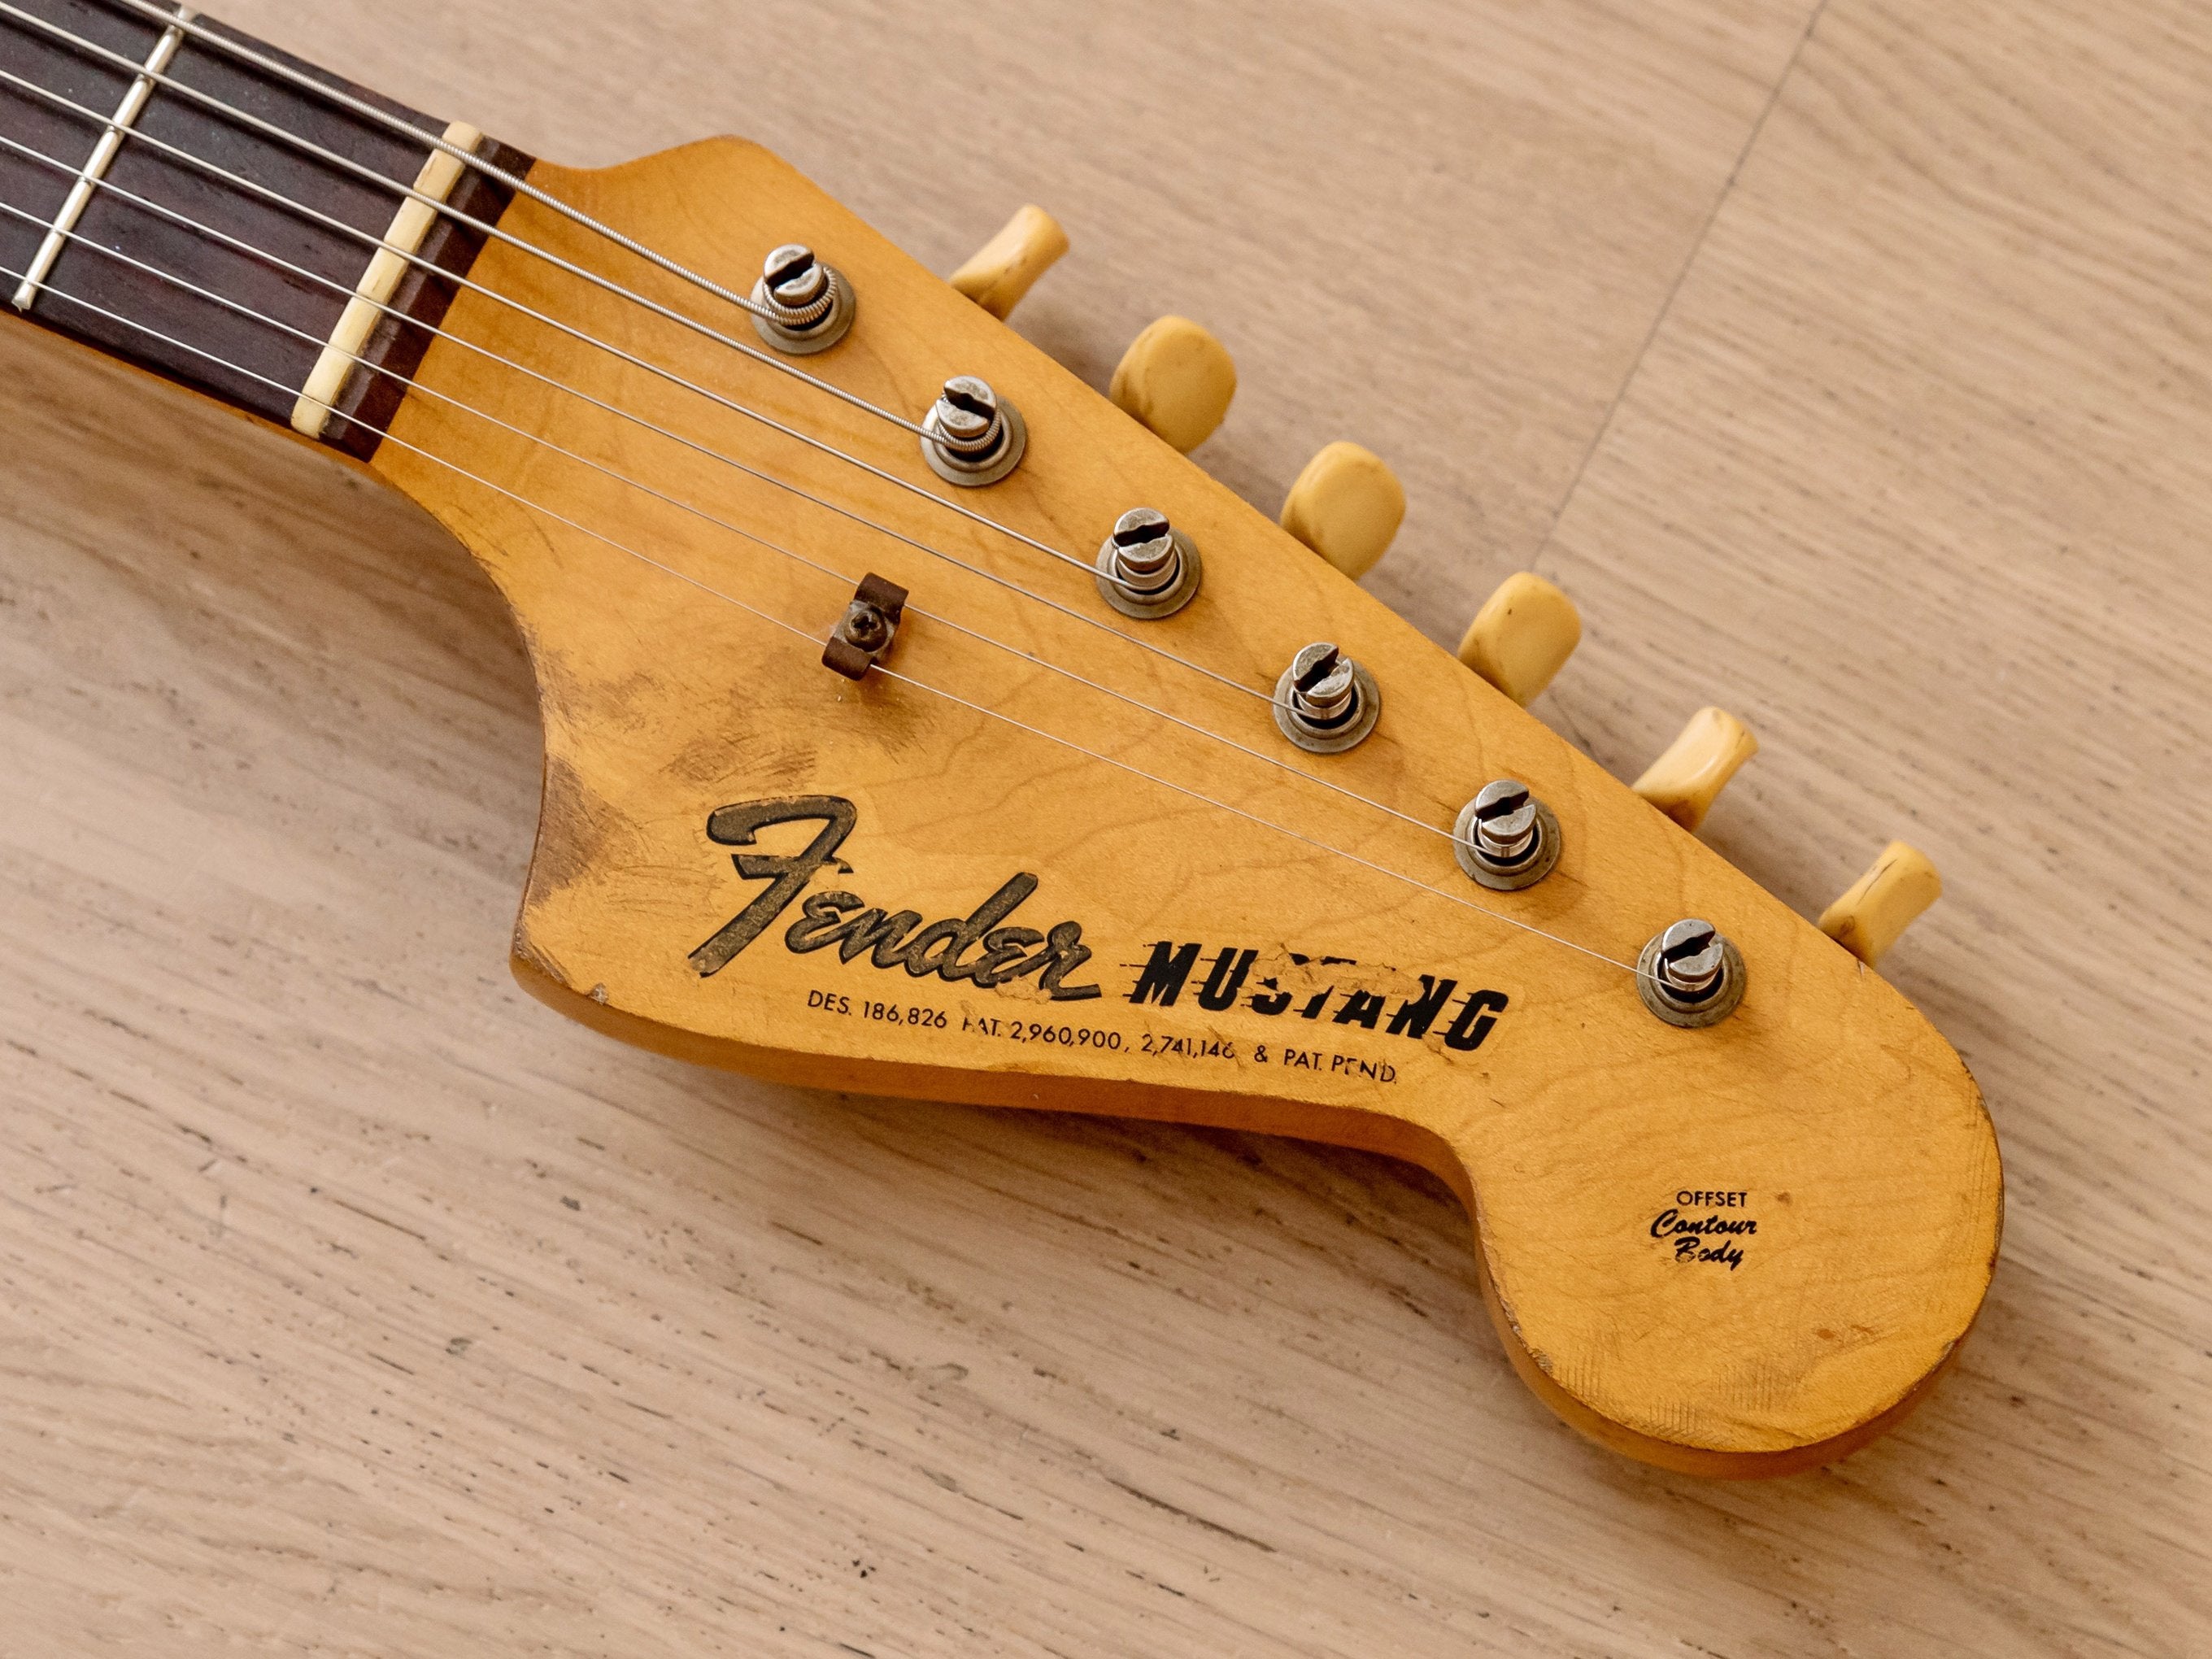 1964 Fender Mustang Vintage Pre-CBS Offset Guitar Daphne Blue, 100% Original w/ Case